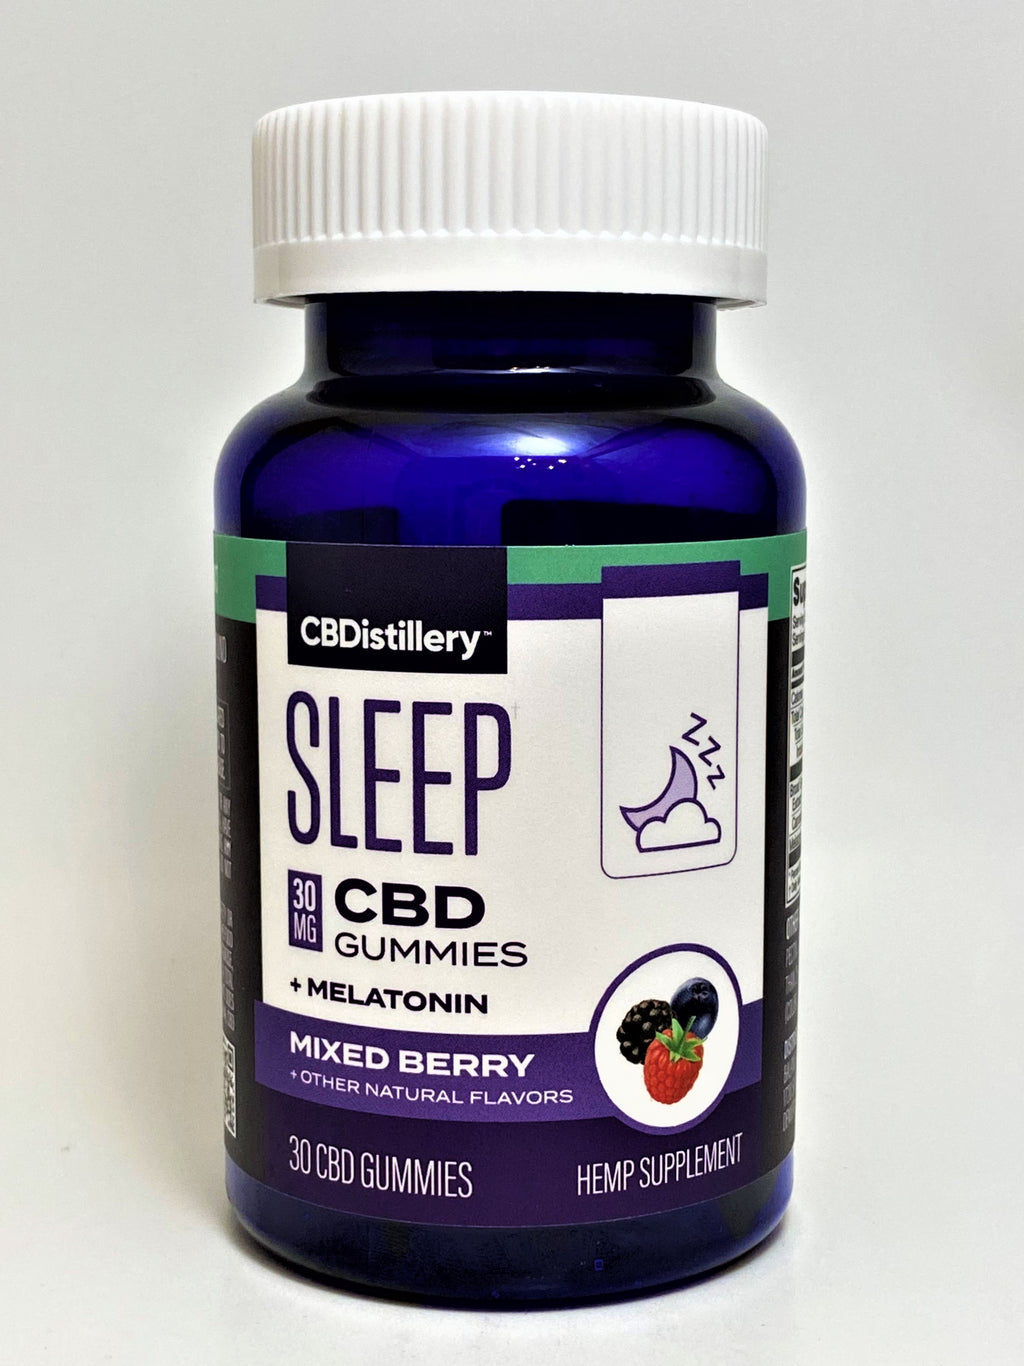 CBDistillery Sleep CBD 900 mg Mixed Berry Gummies+Melatonin 30 mg (30 ct)